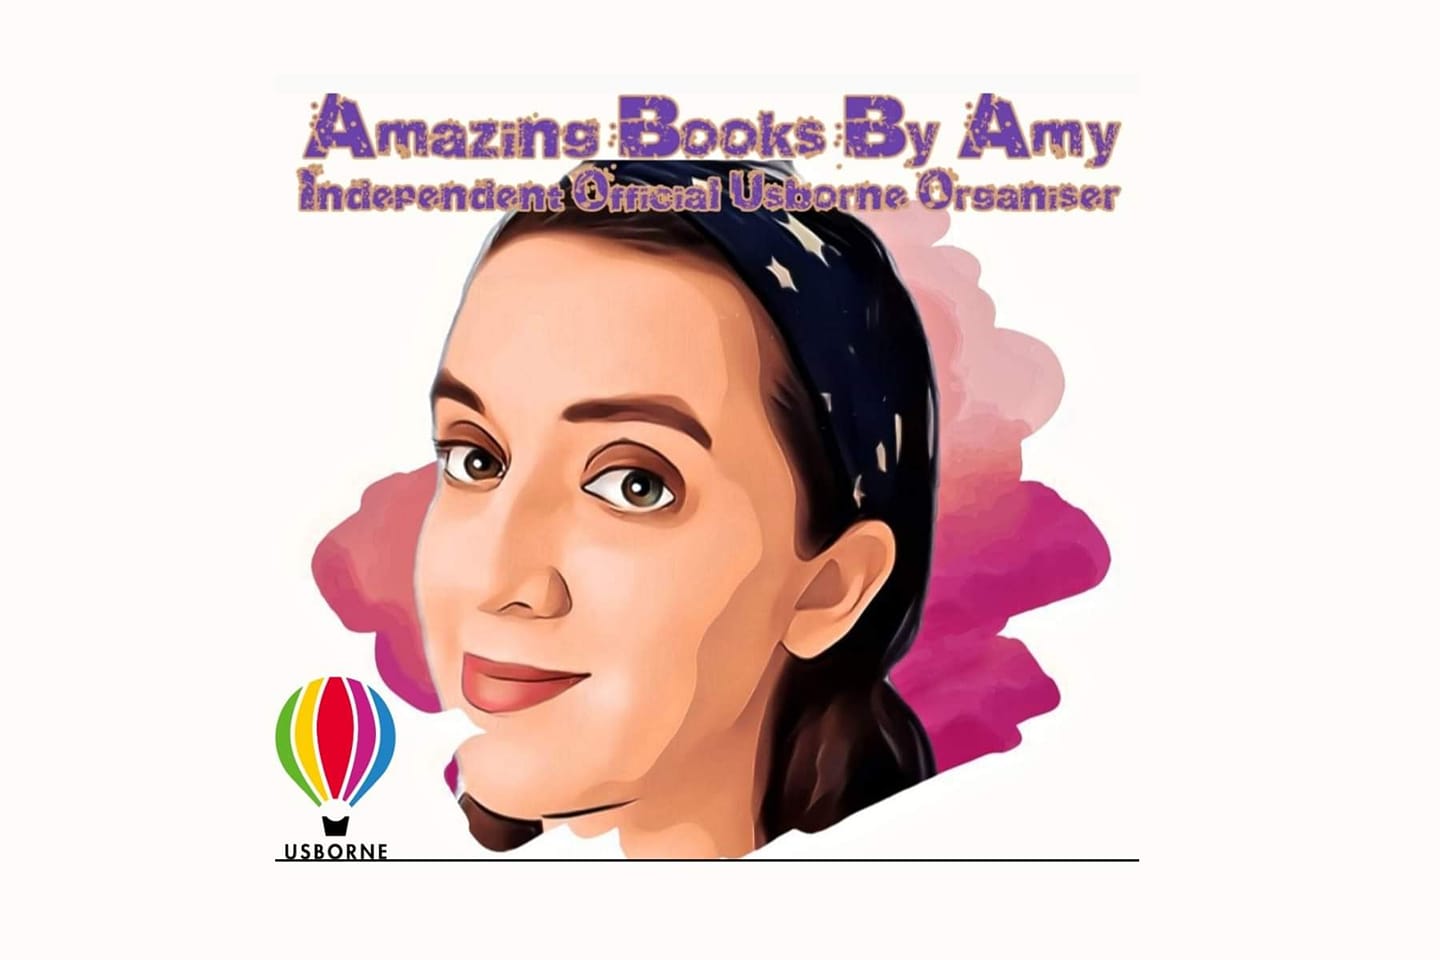 EXHIBITOR: Amazing Books By Amy